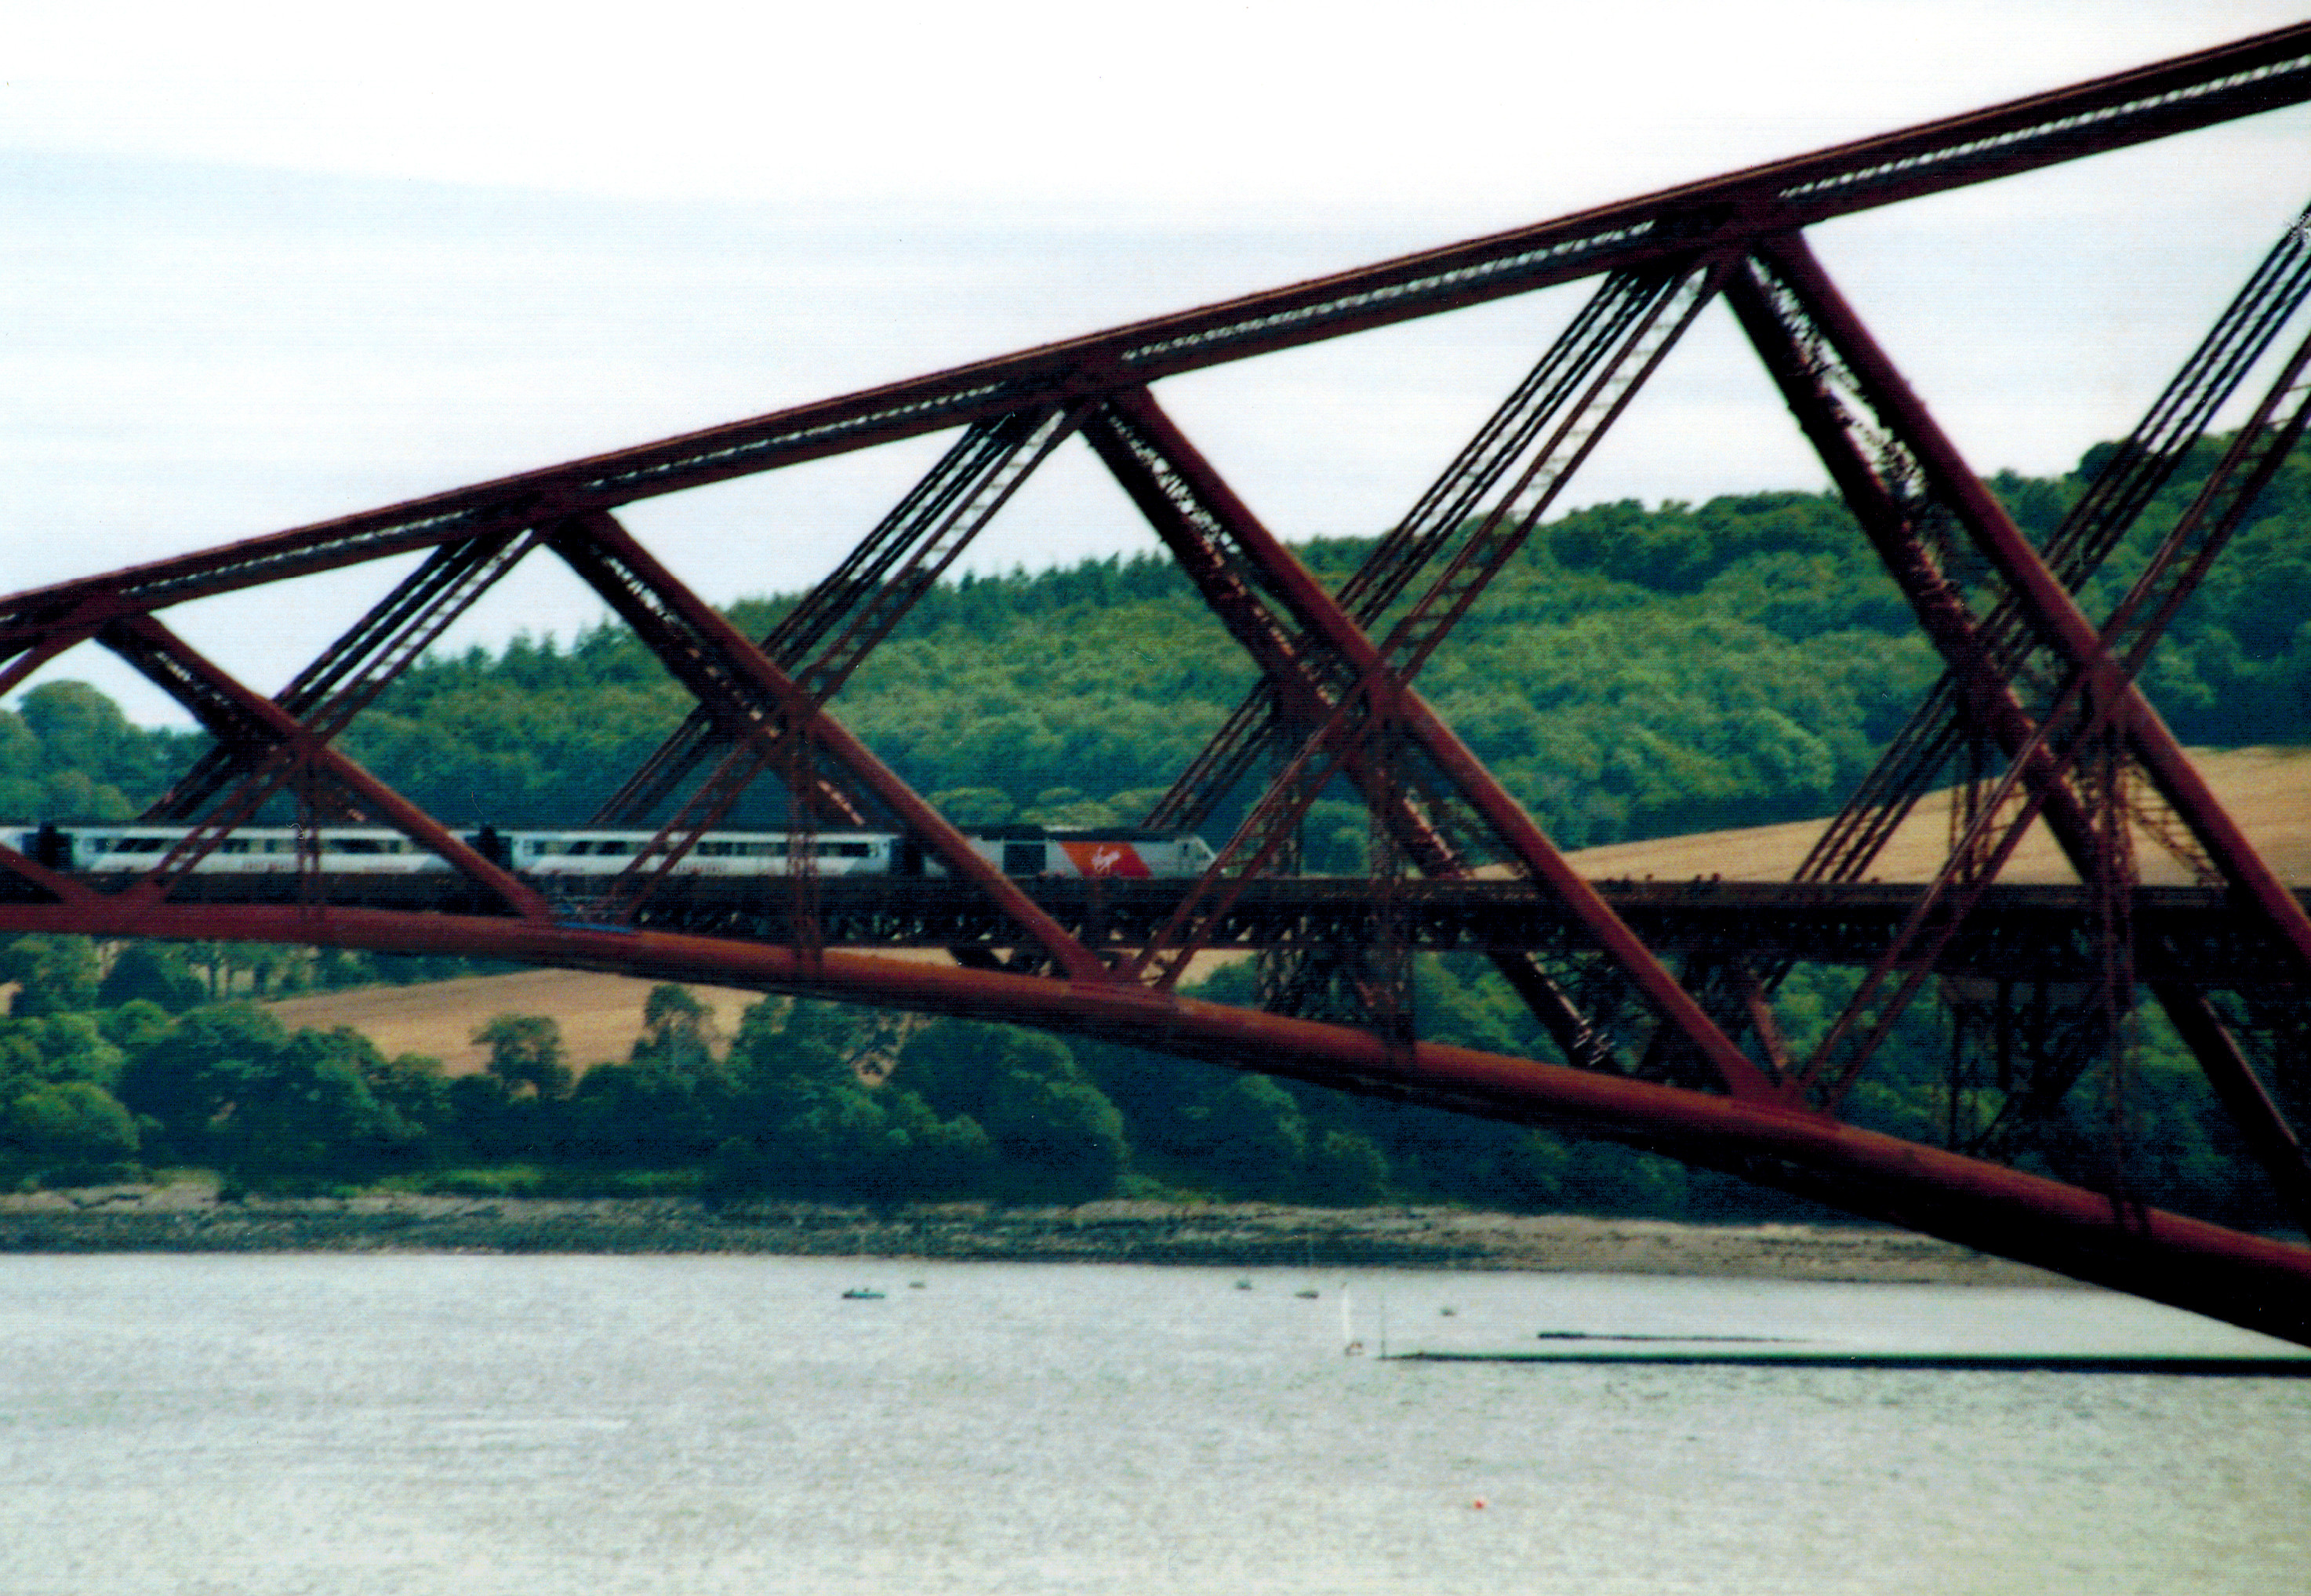 Мосты 2015. Мост 2015. Великобритания 1 фунт, 2004 мост Форт-бридж.